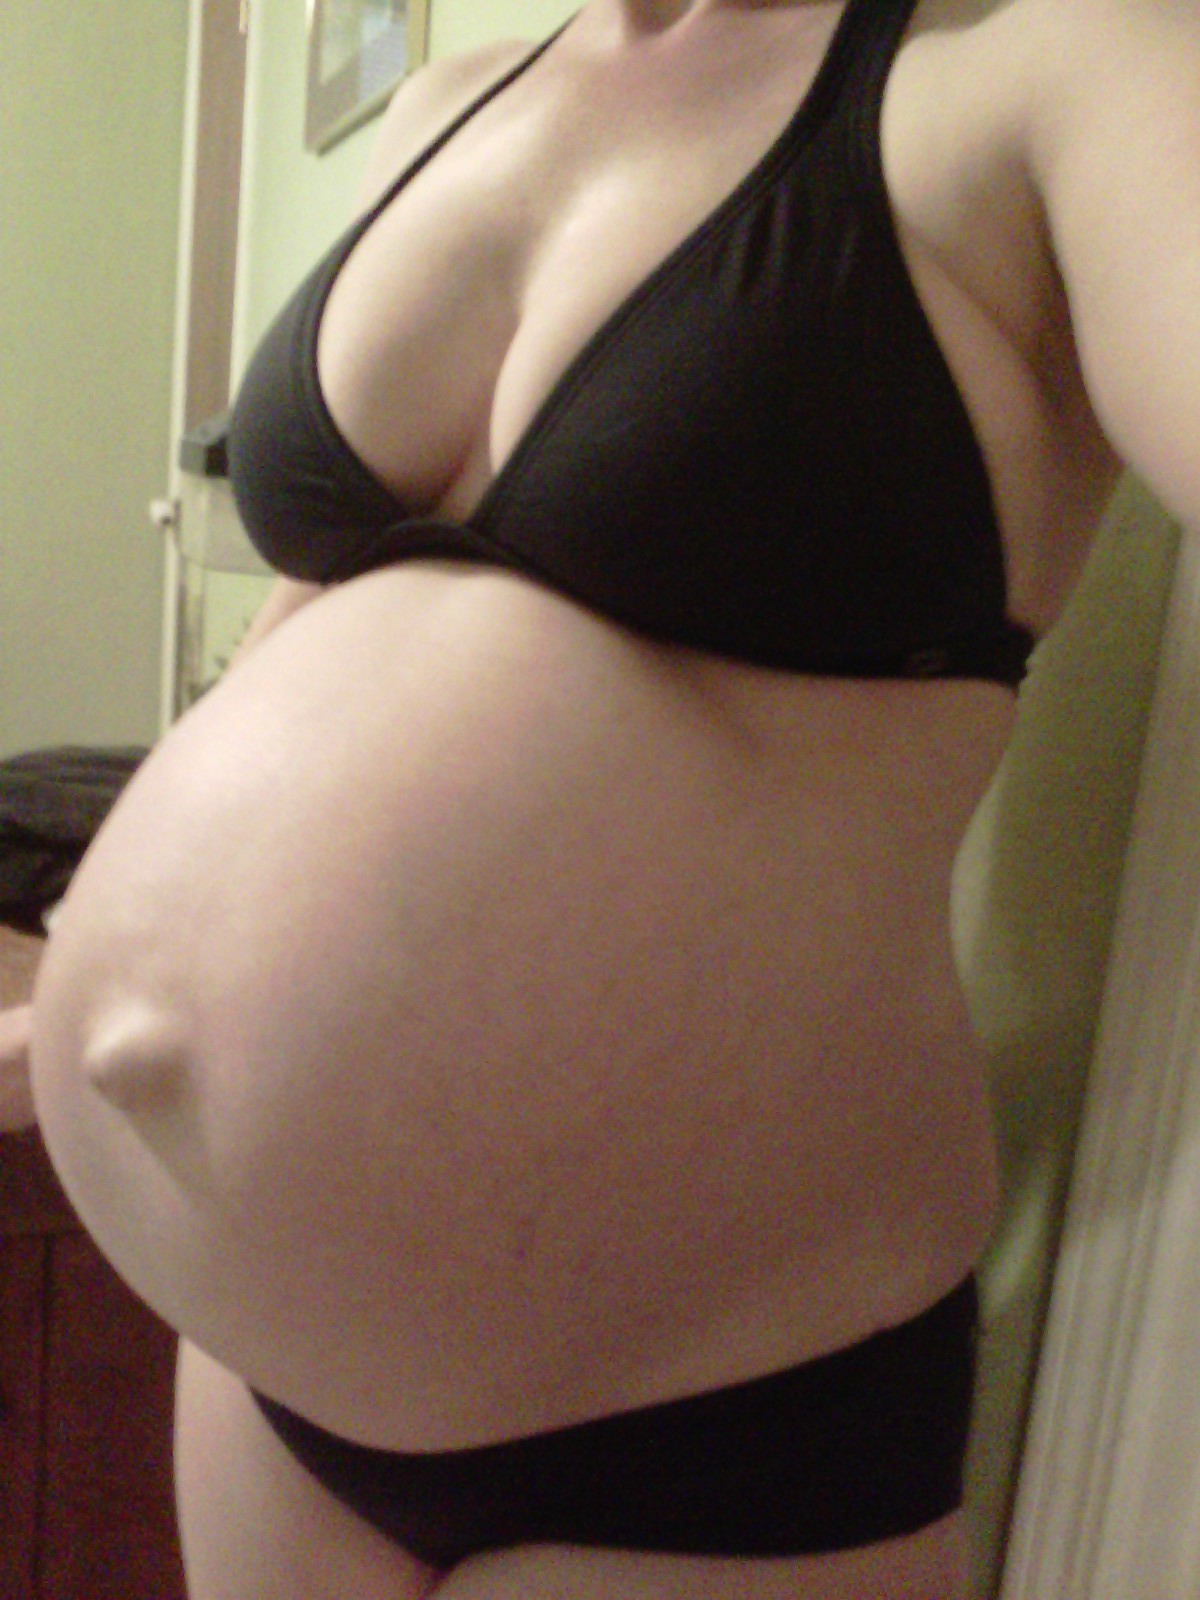 Huge pregnant belly tumblr